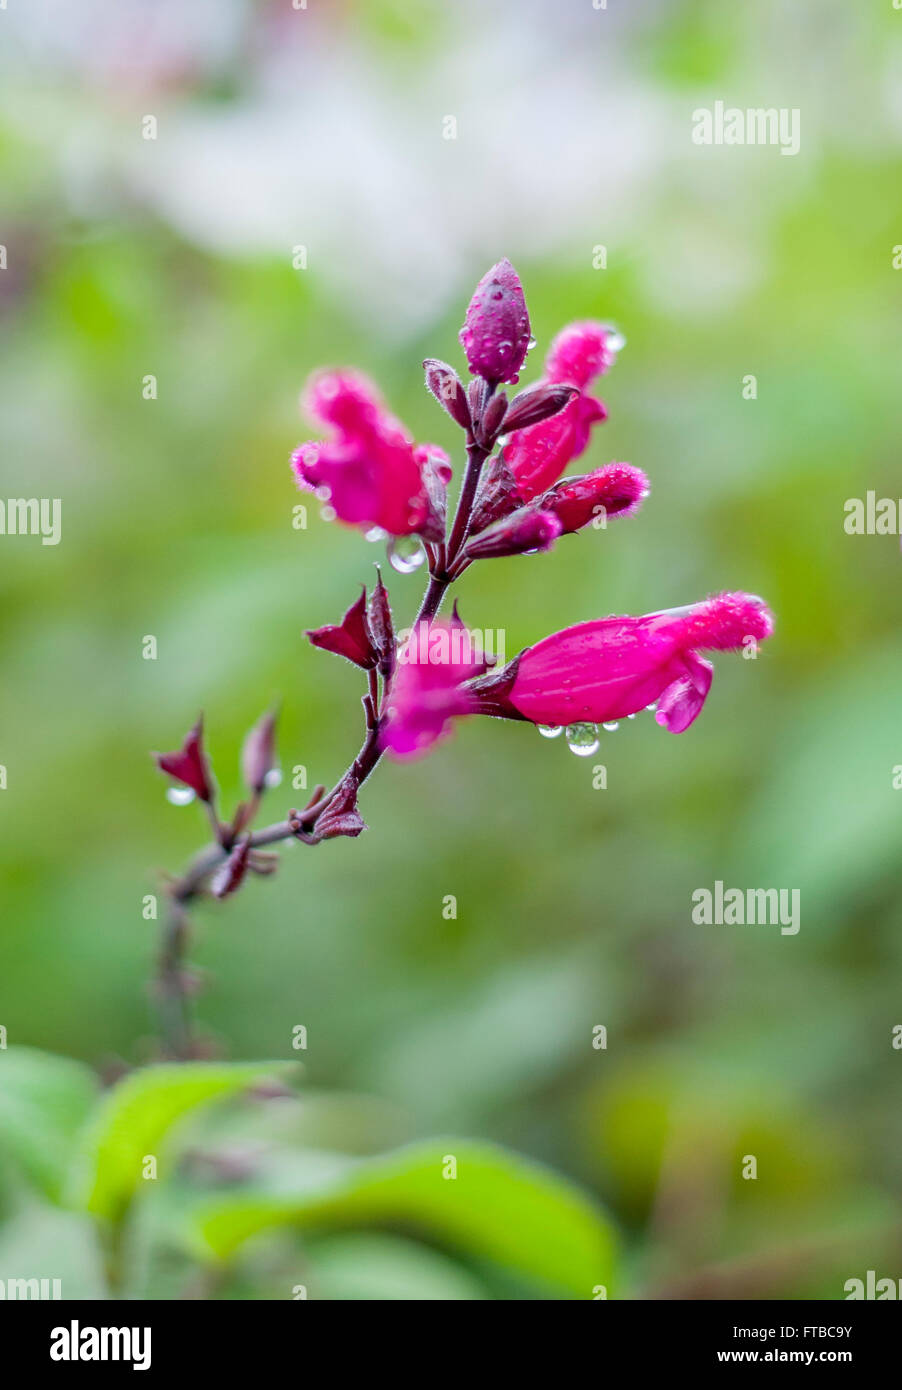 Garten bei Regen, Blume abstrakt, Fokus auf regen Tropfen; dunkel rosa Salvia involucrata Blüten, rosebud Salvia w/hellgrün Hintergrund bokeh. Stockfoto